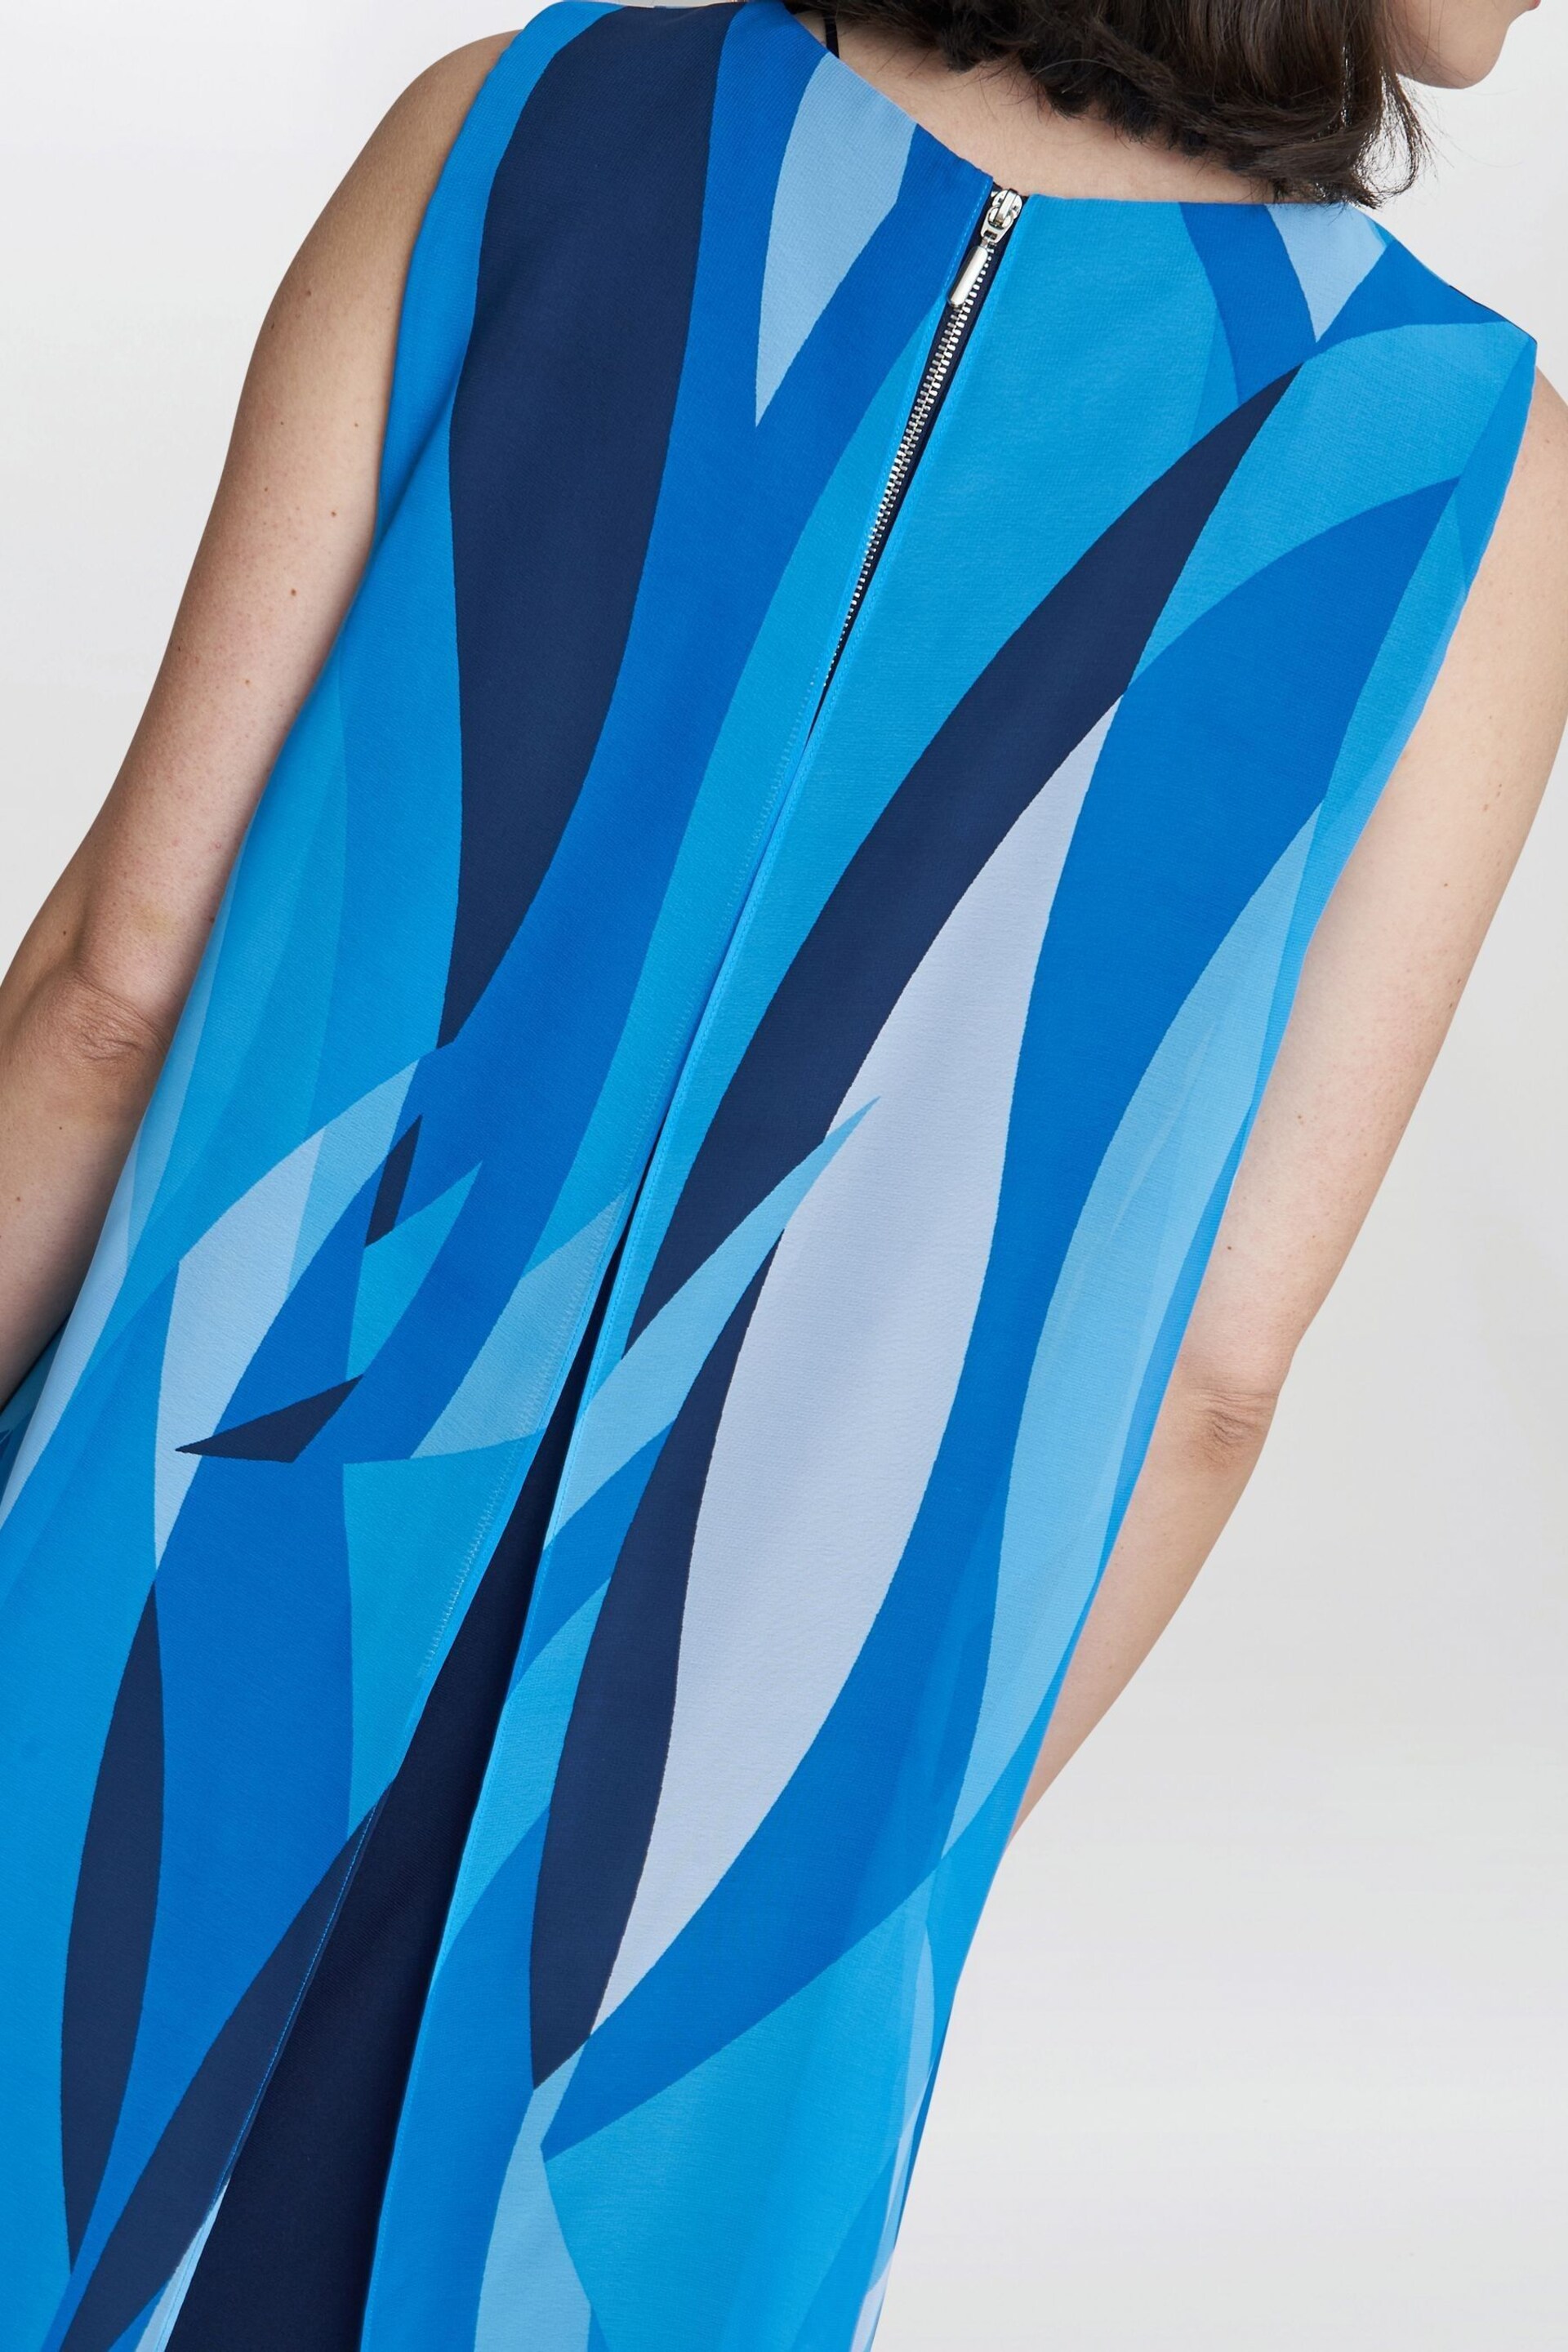 Gina Bacconi Blue Edie Short Printed Asymmetric Overlay Dress - Image 4 of 5